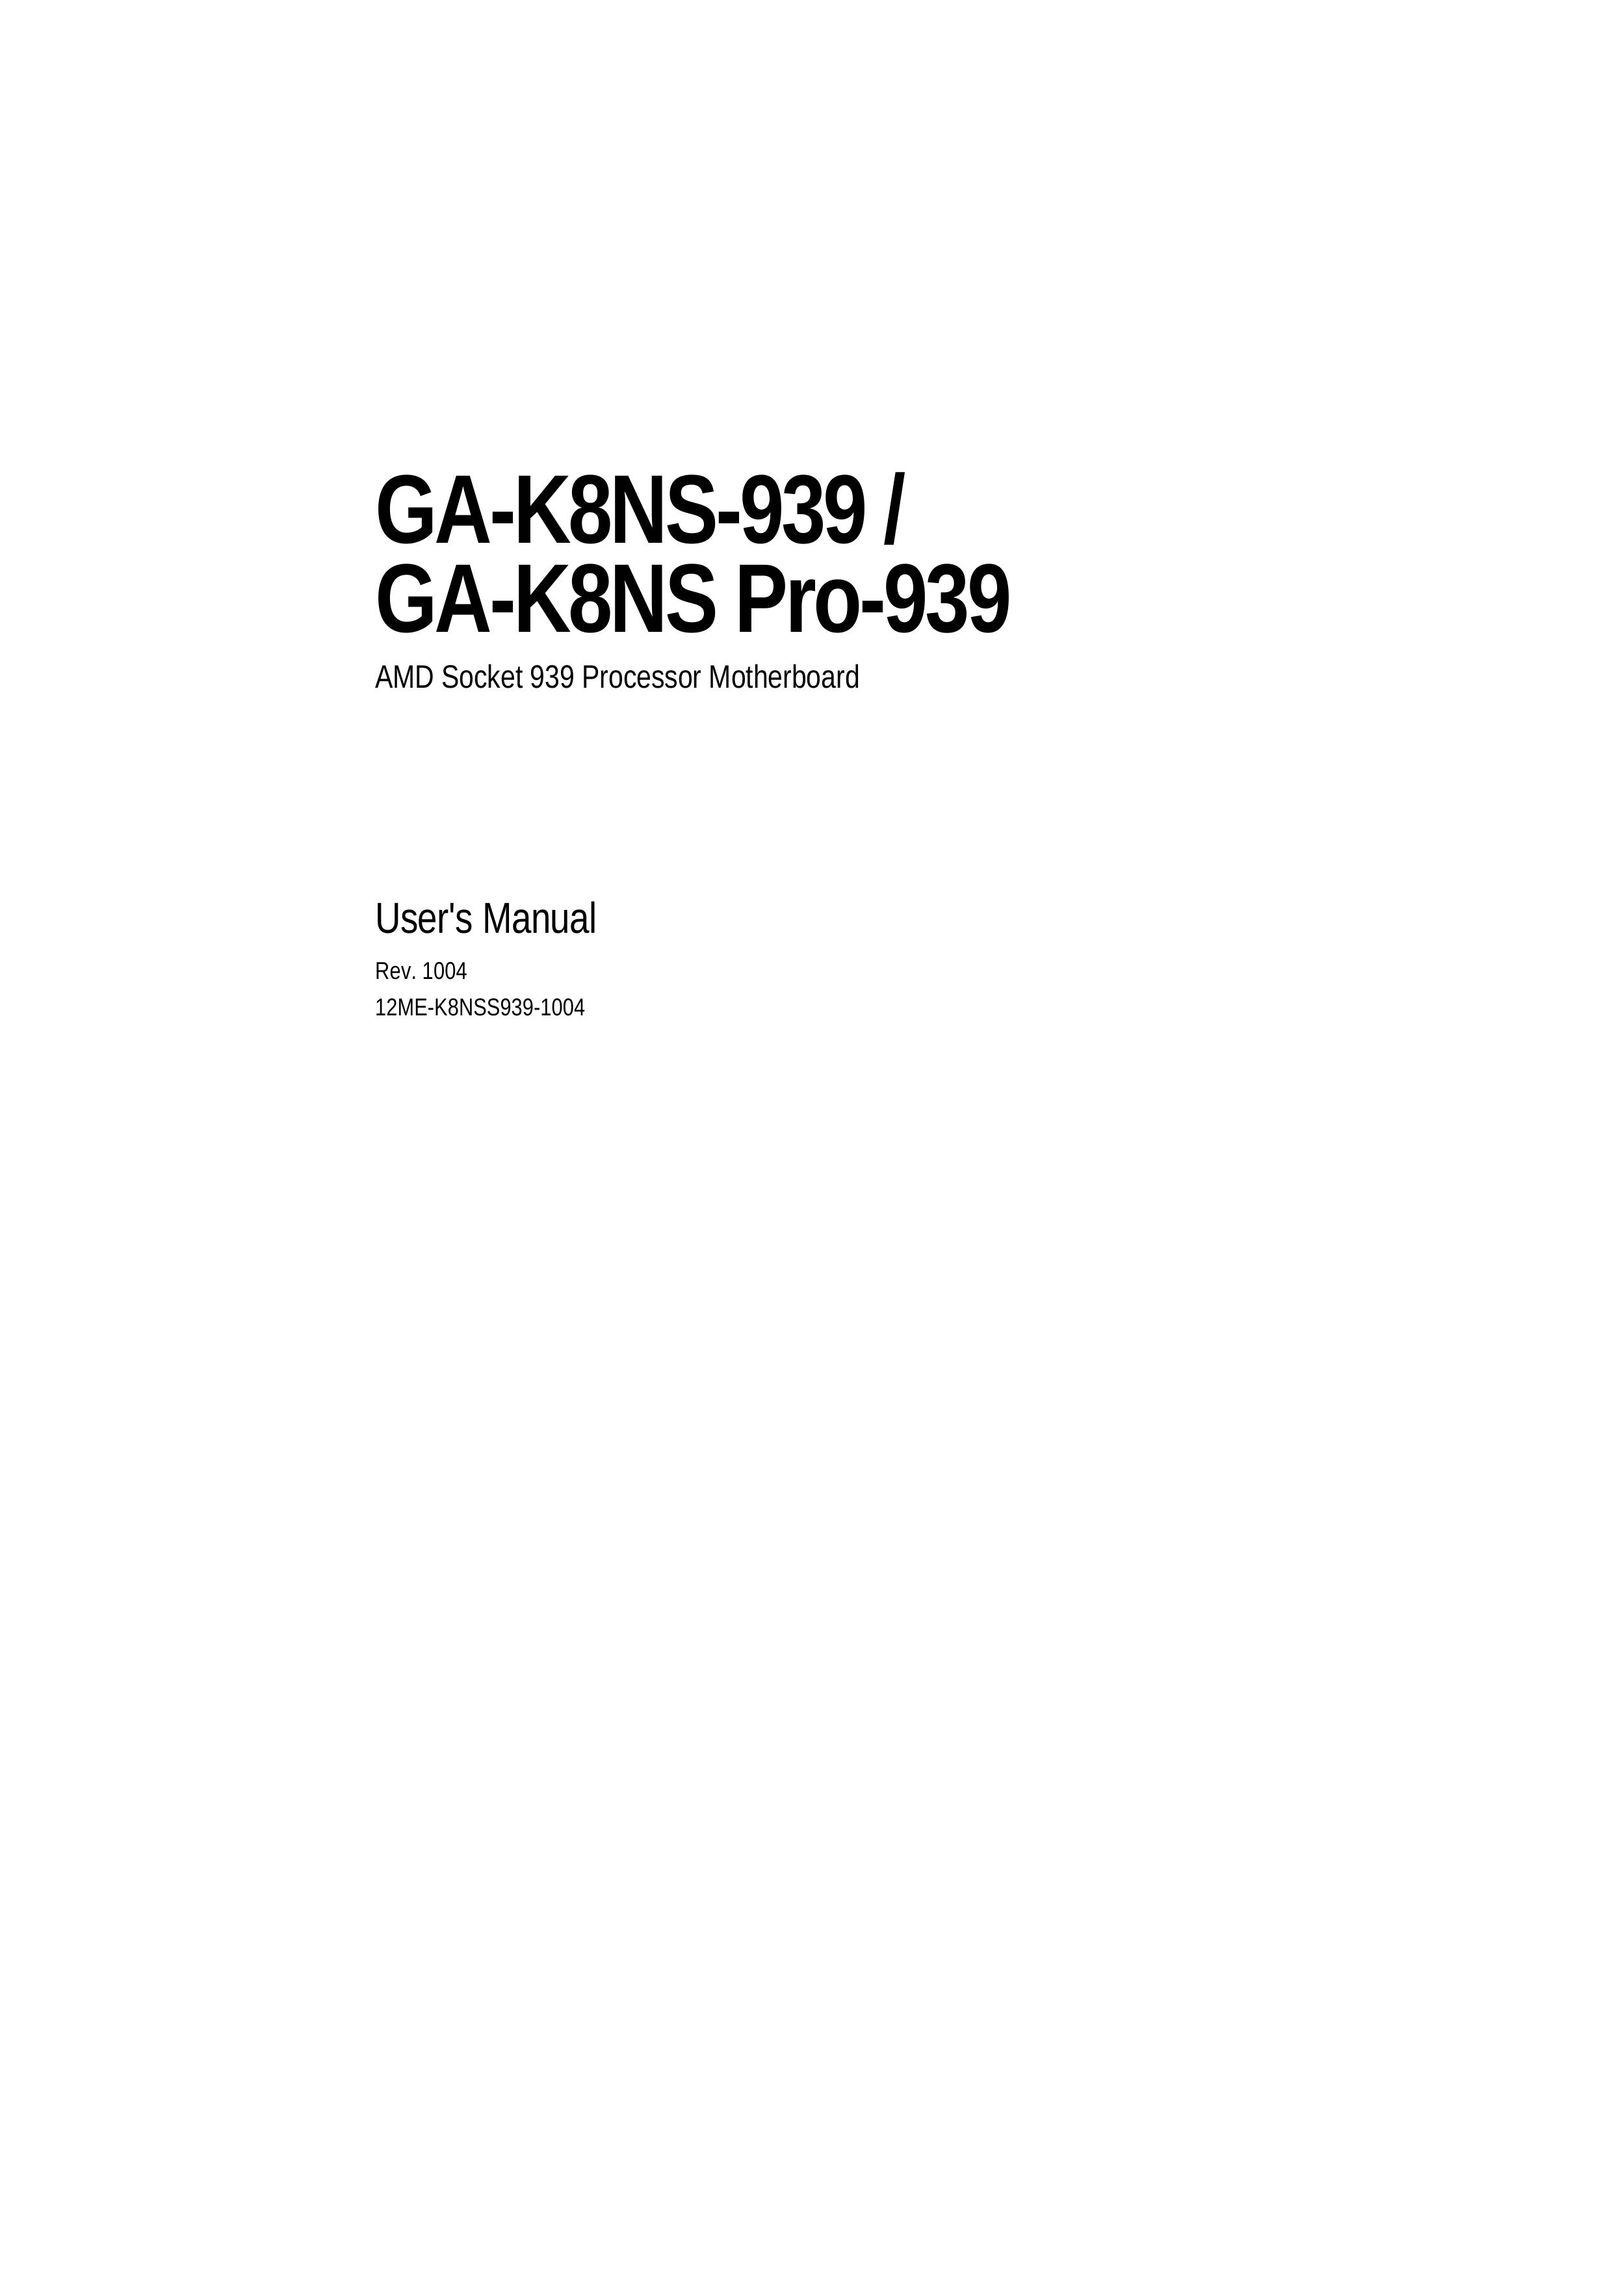 AMD GA-K8NS PRO-939 Computer Hardware User Manual